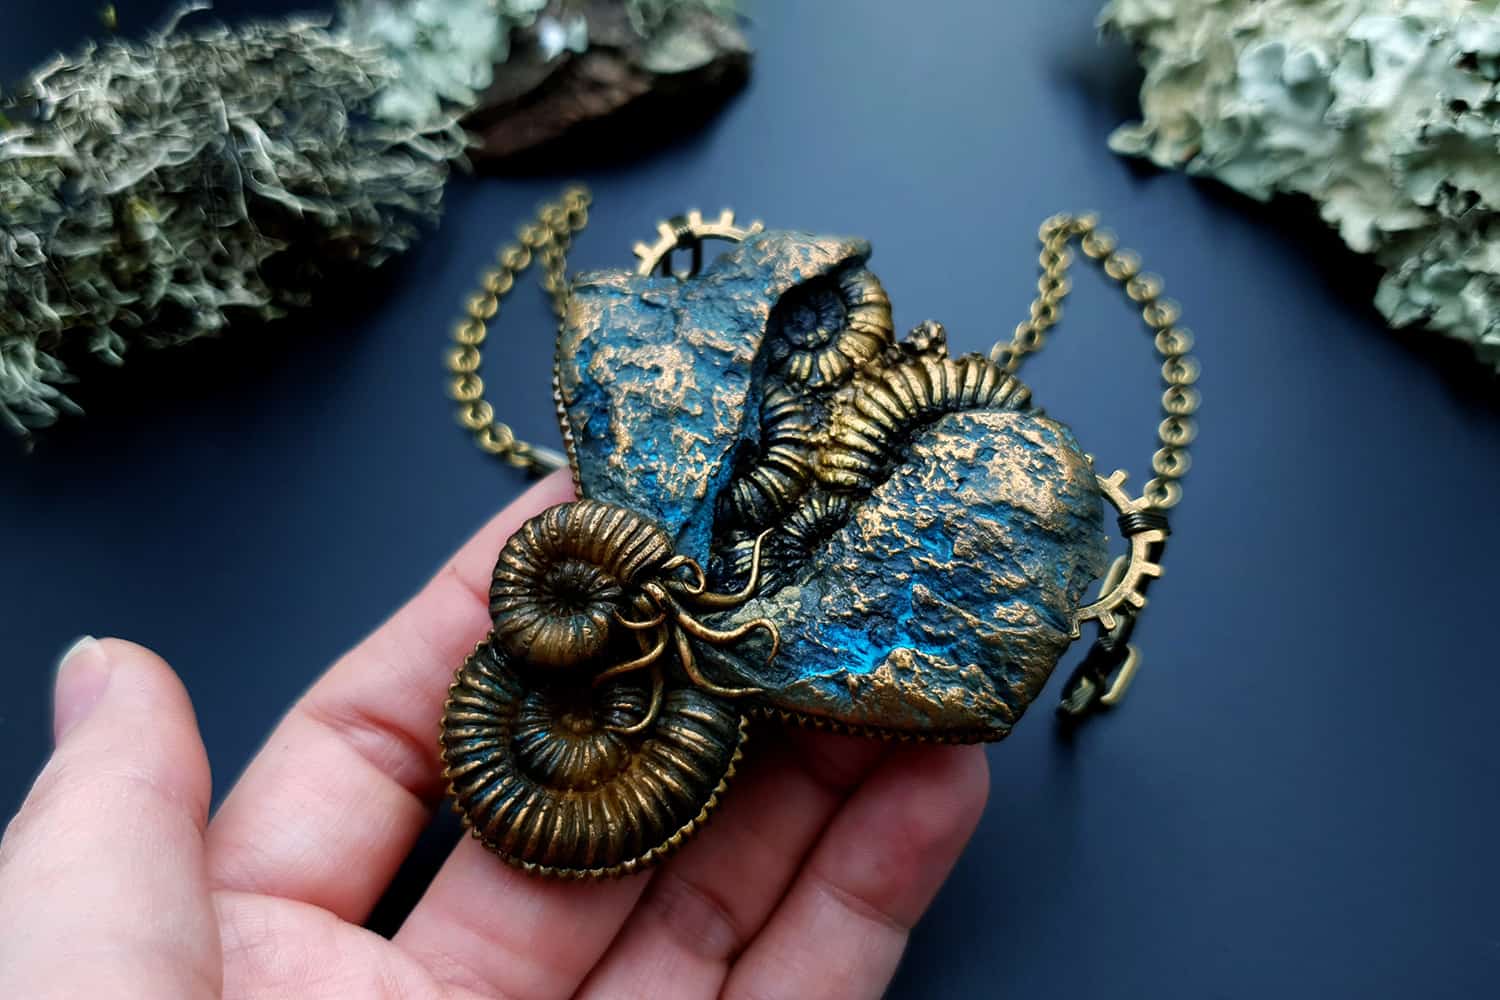 Large Ammonites Mold #1 (21904)